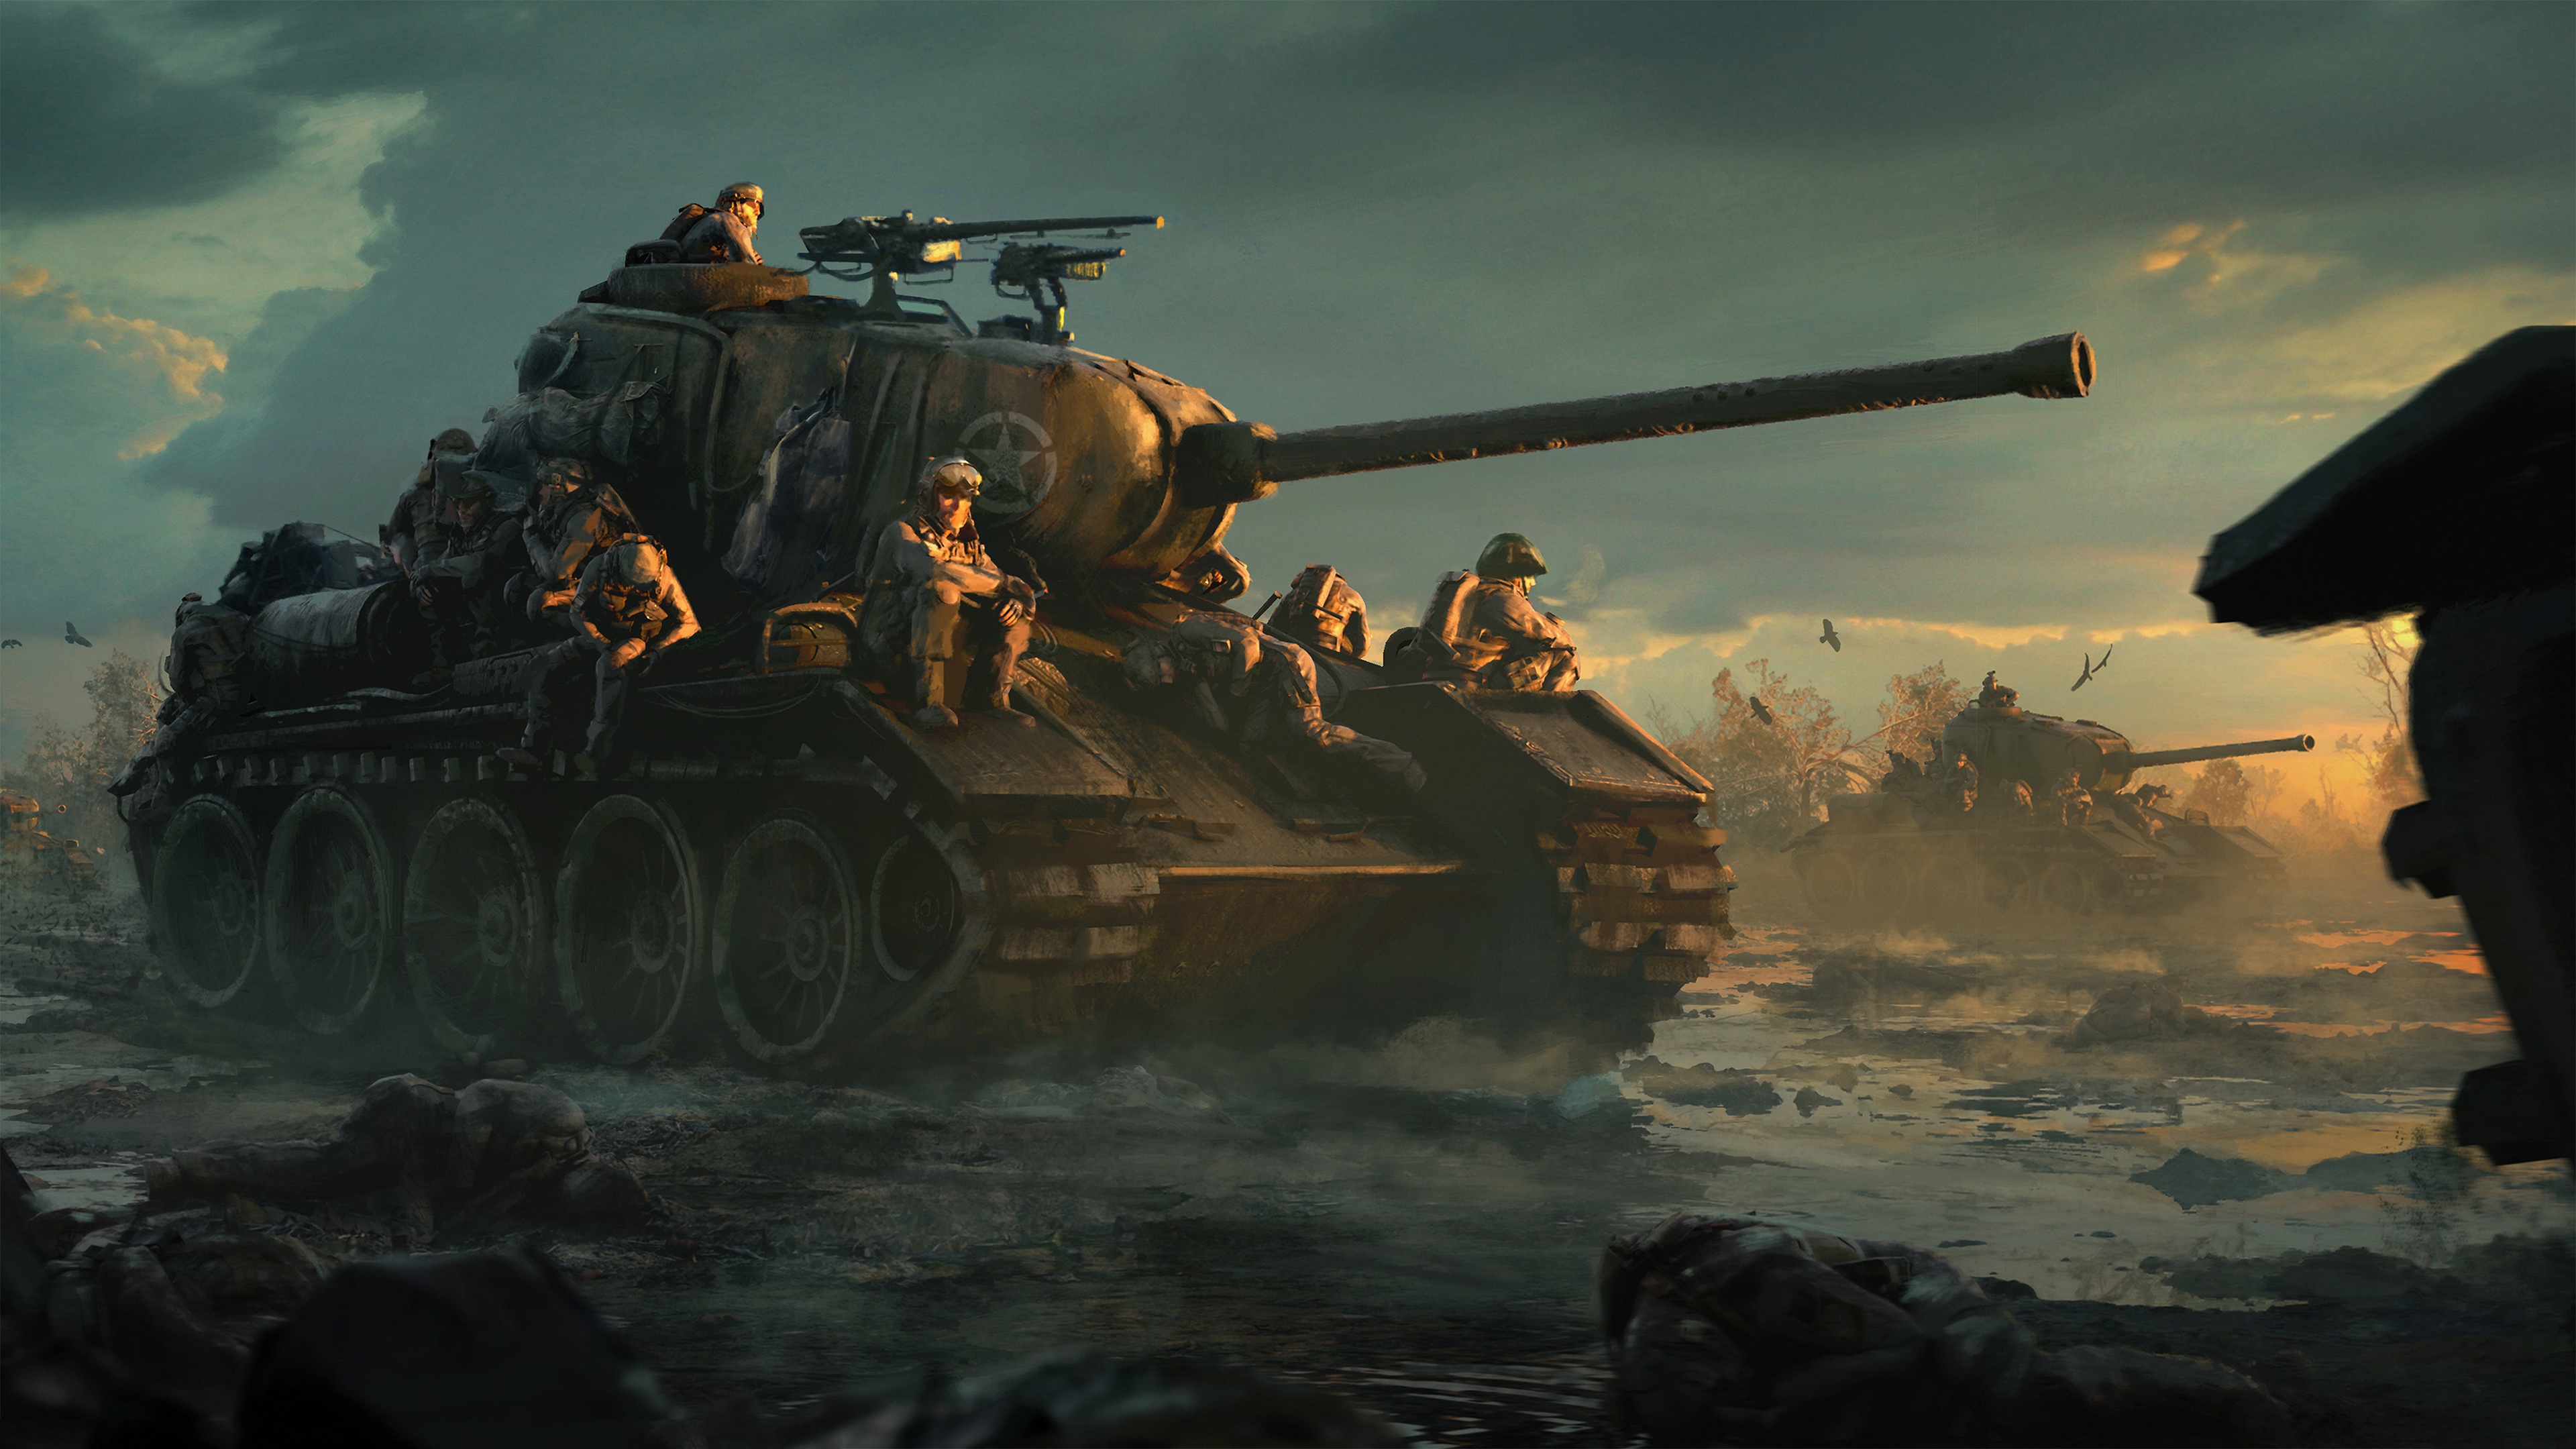 Anime 3840x2160 Wojtek Fus tank soldier war digital art sunset